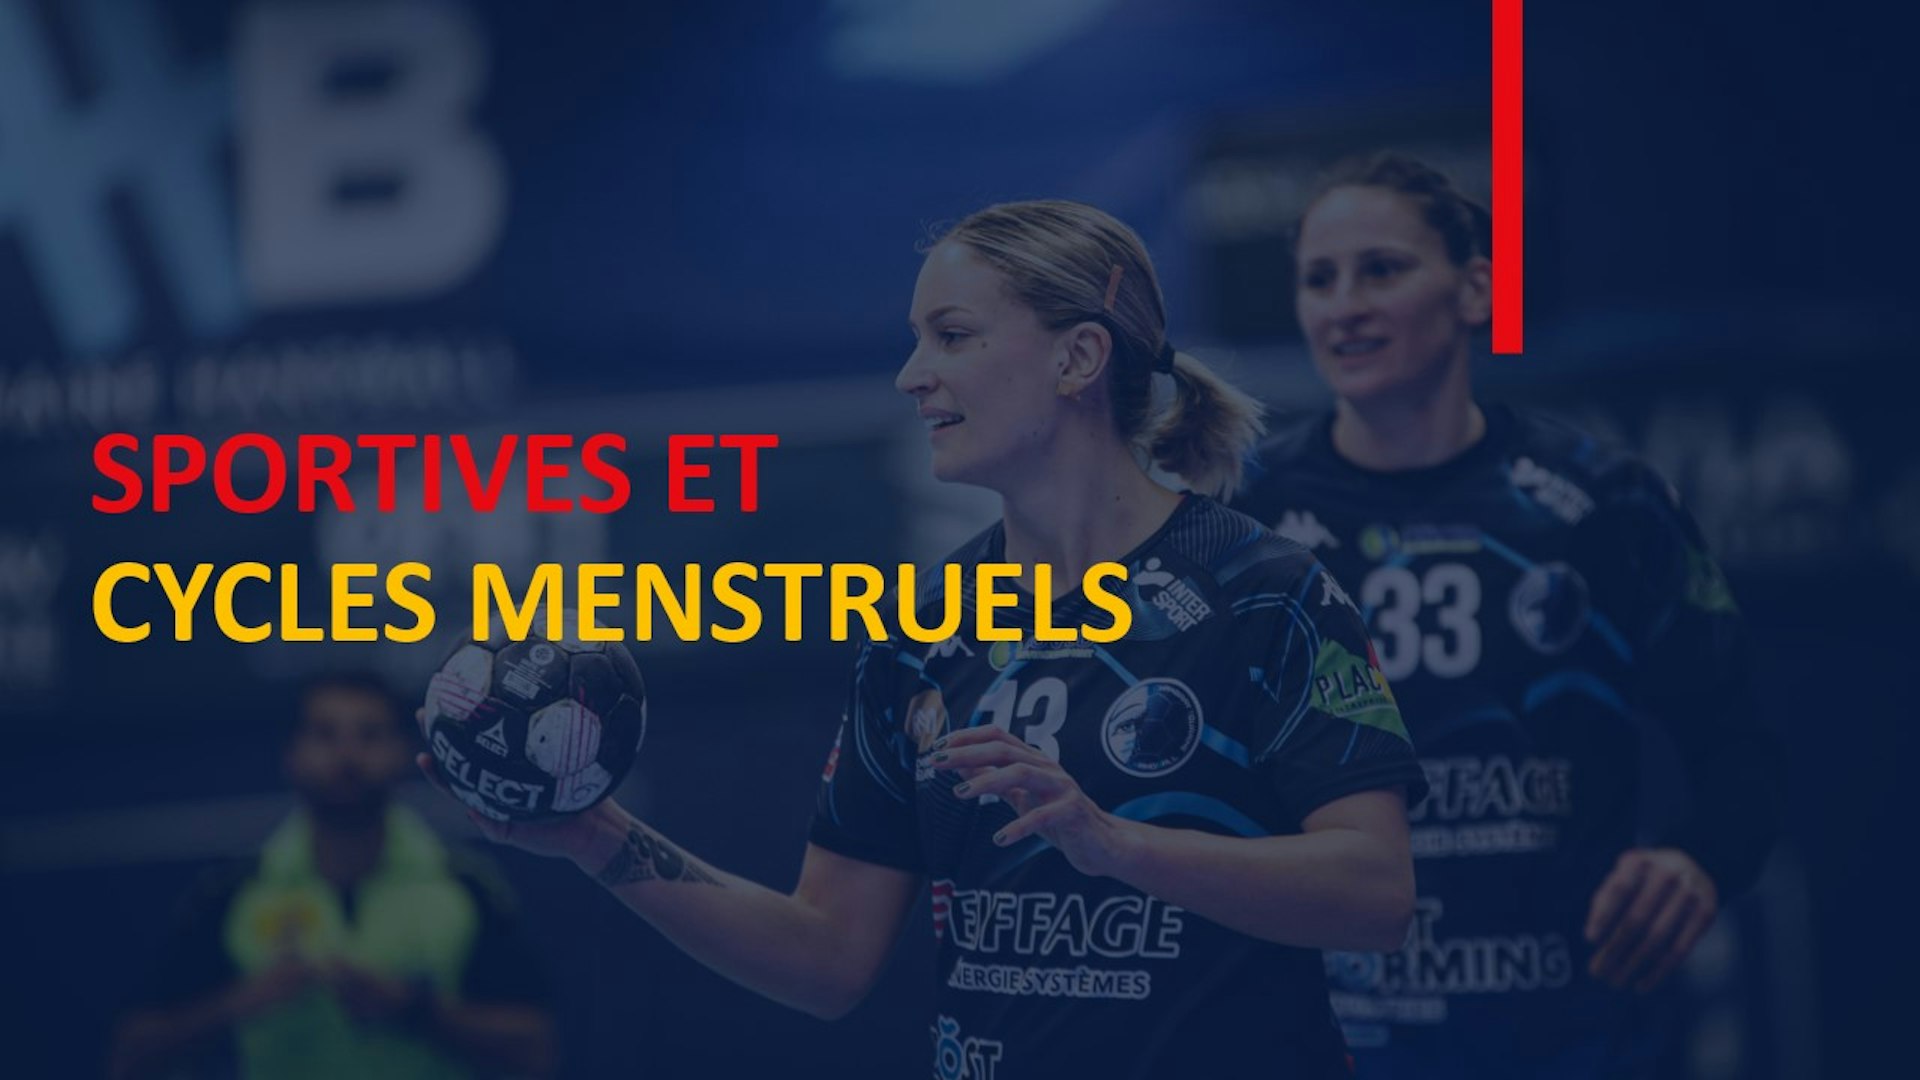 Sportives et Cycles menstruels - Chambray Touraine Handball